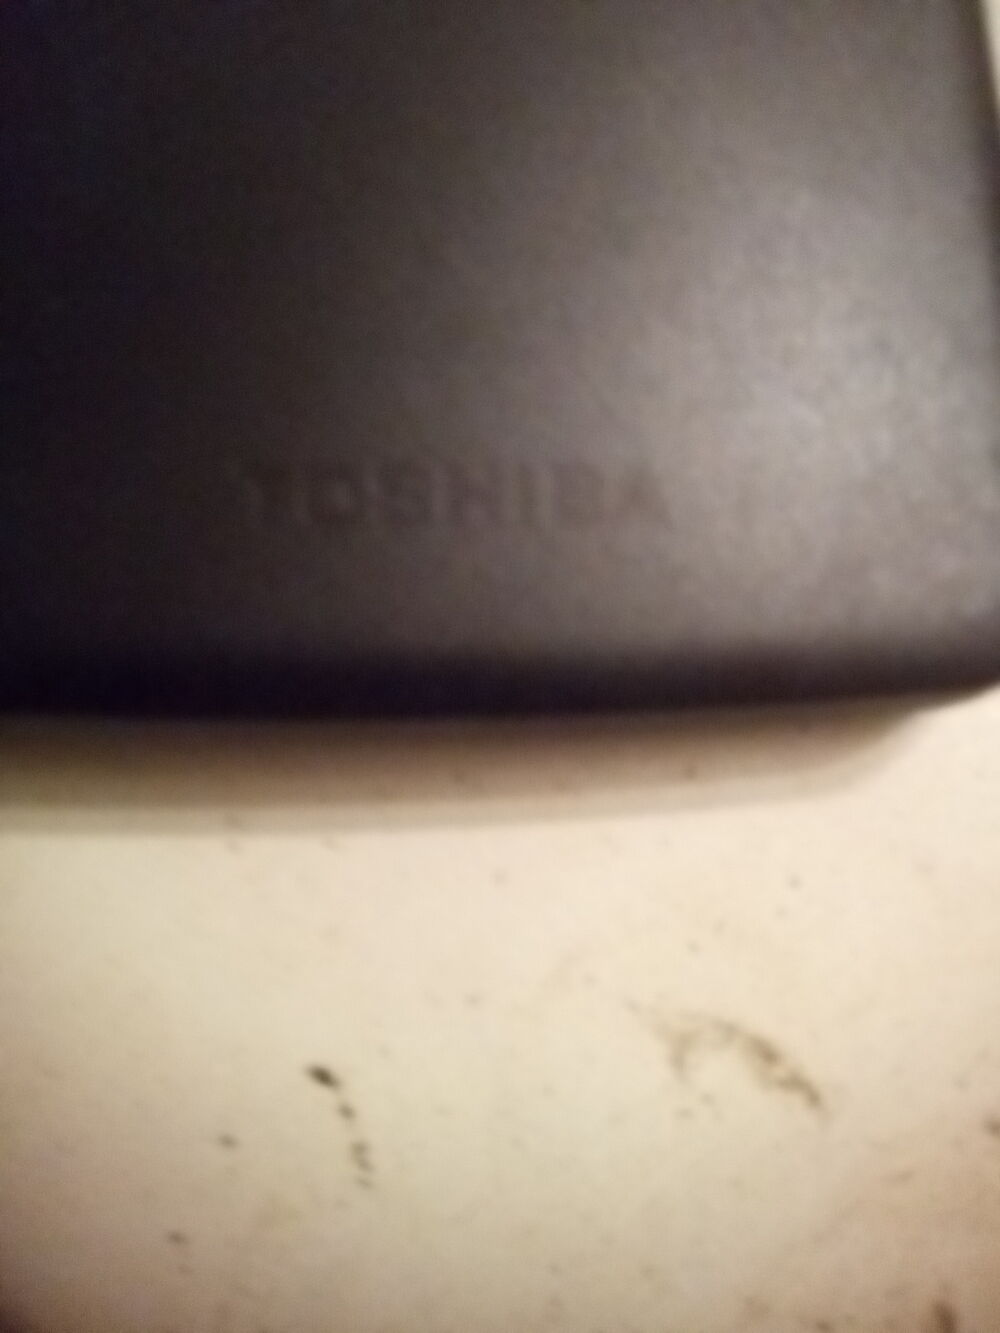 Disque dur externe Toshiba Matriel informatique